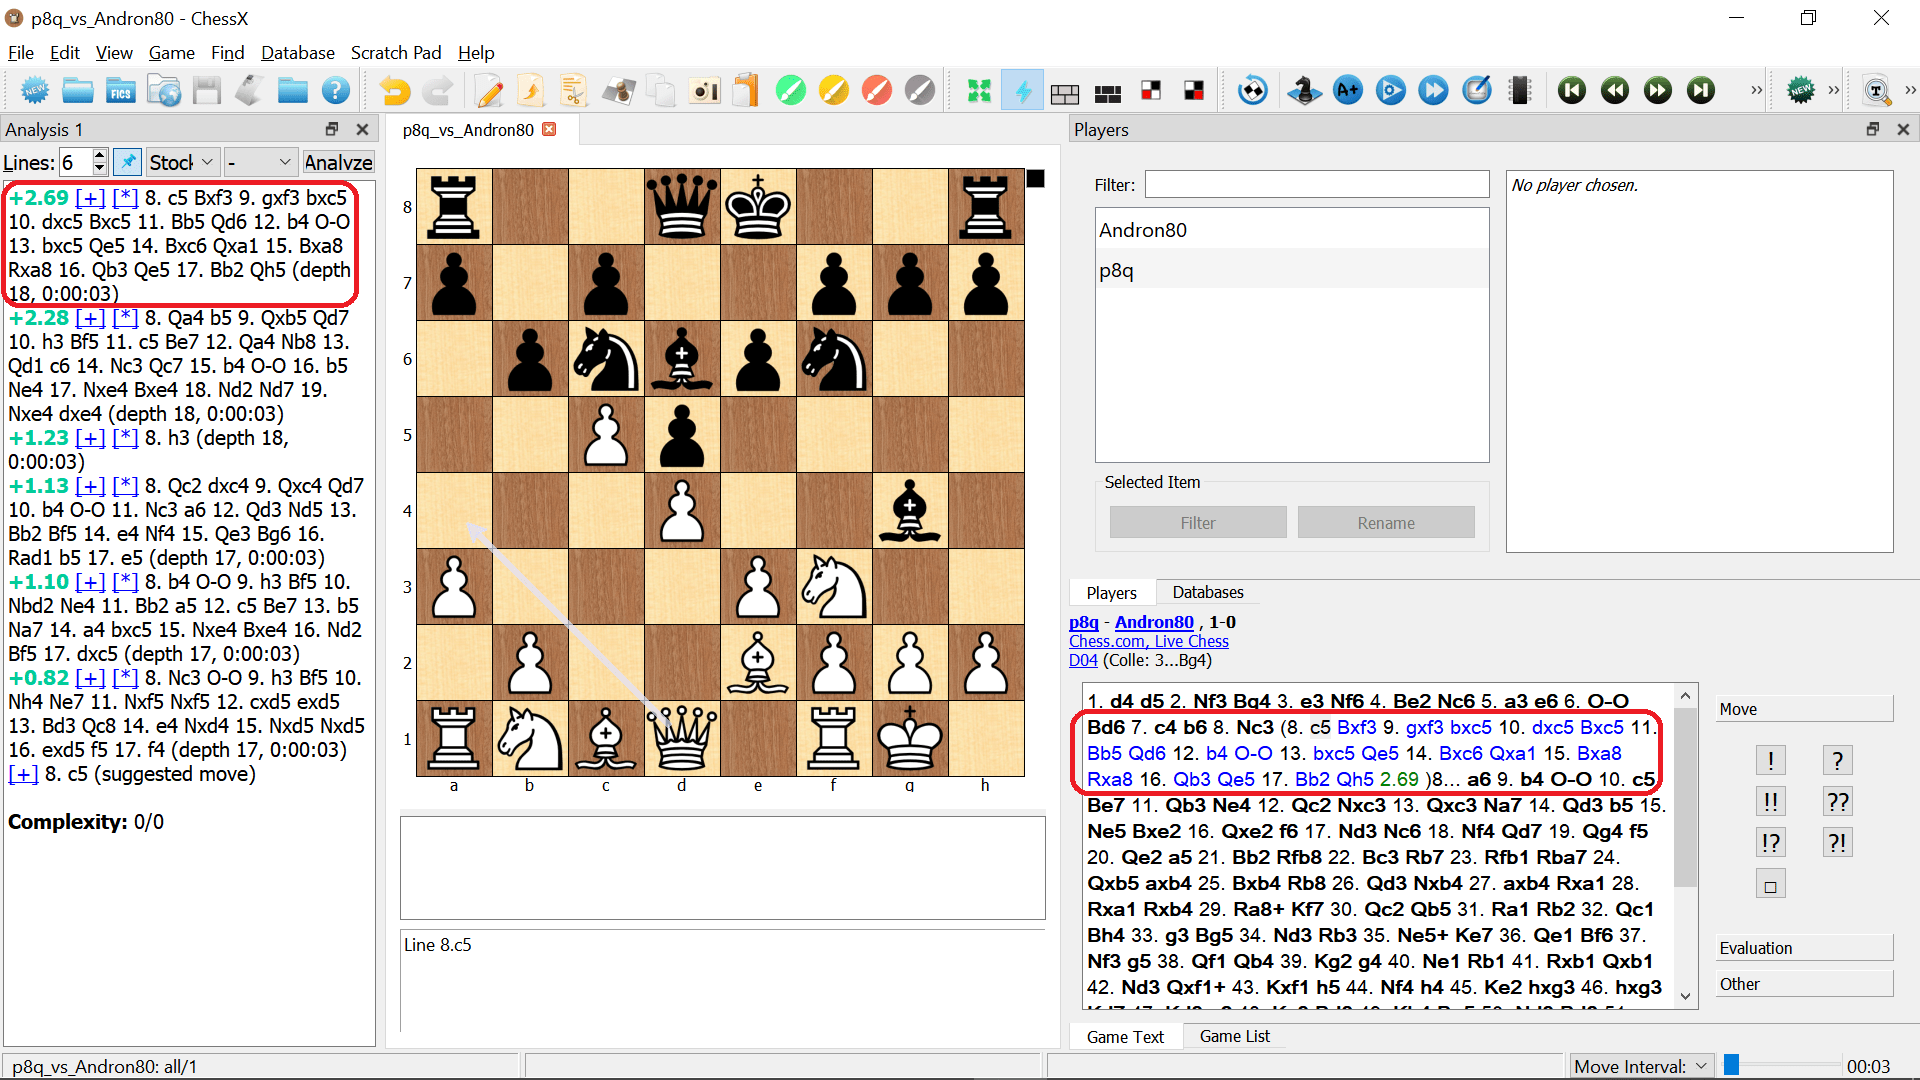 Really, chess.com analysis? : r/chess